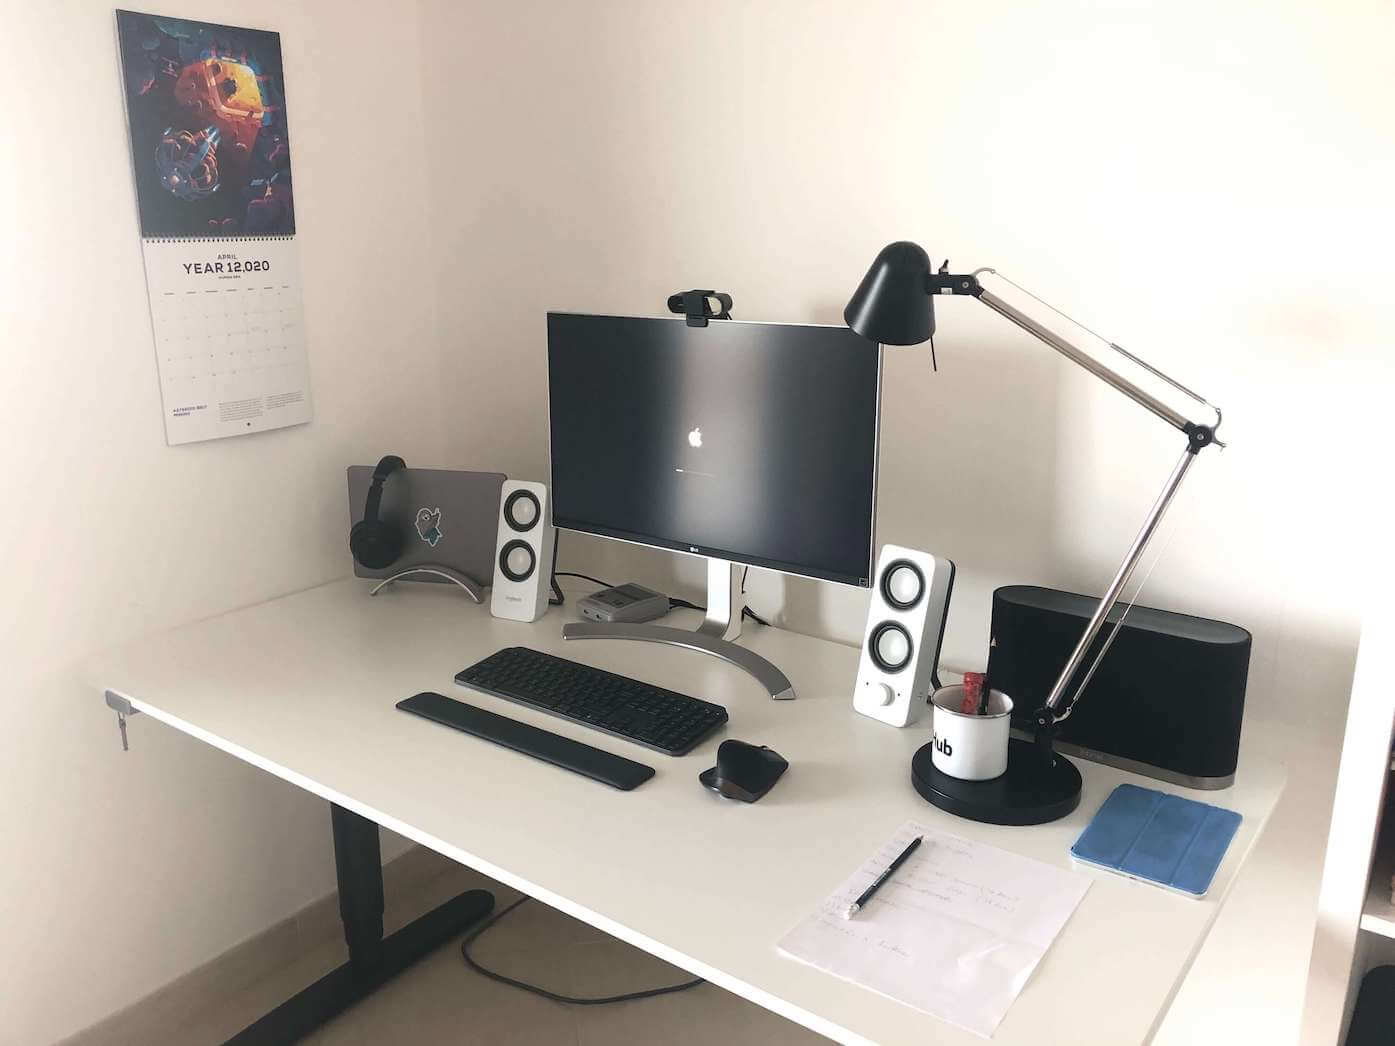 Matteo Latini's home office setup.